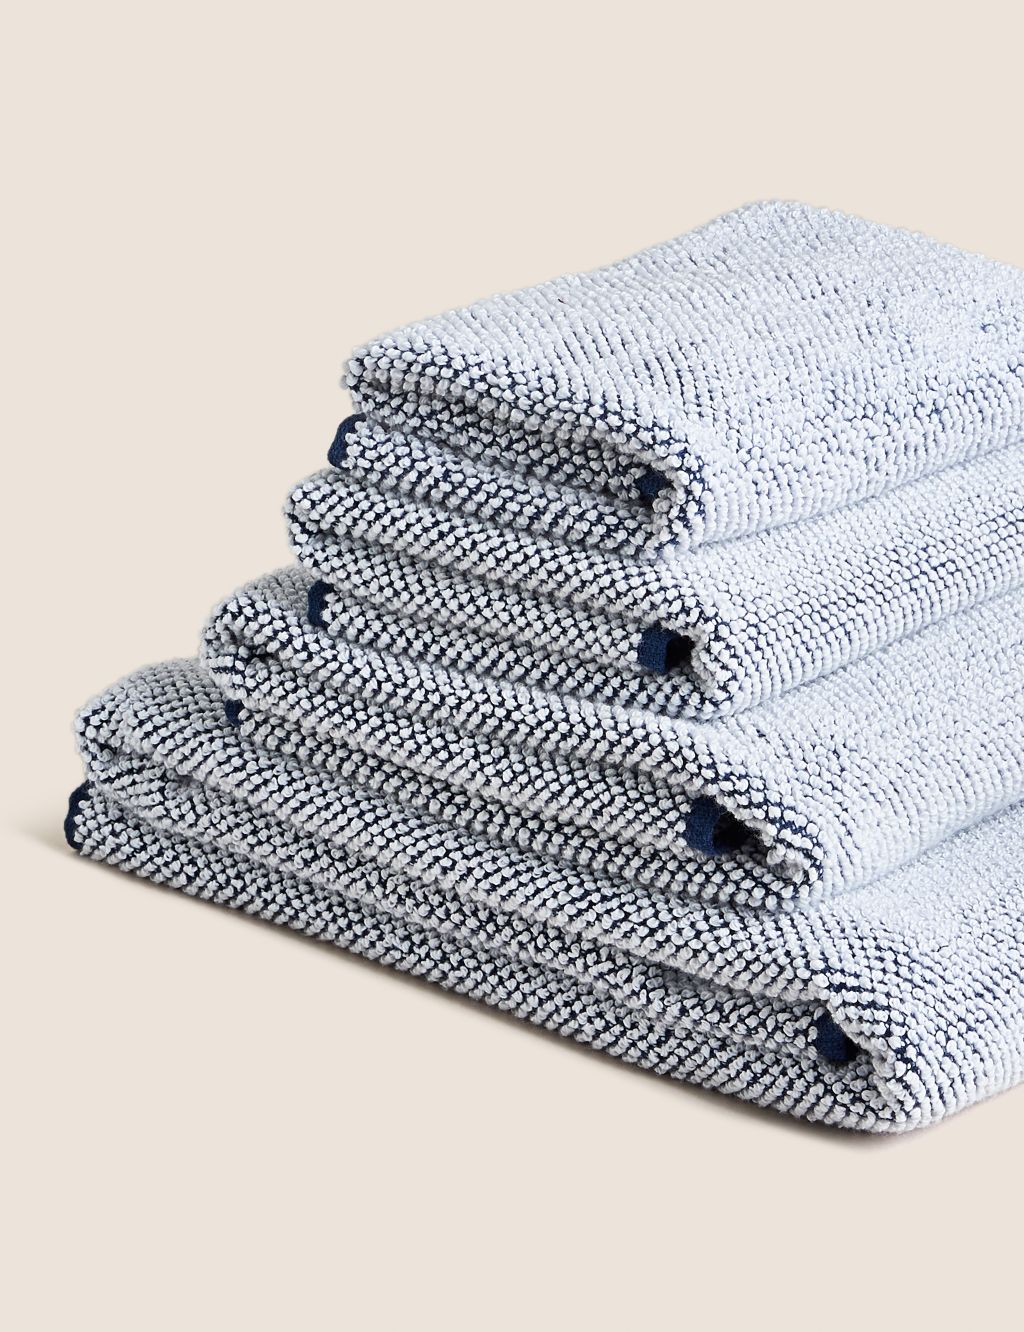 Pure Cotton Cosy Weave Towel